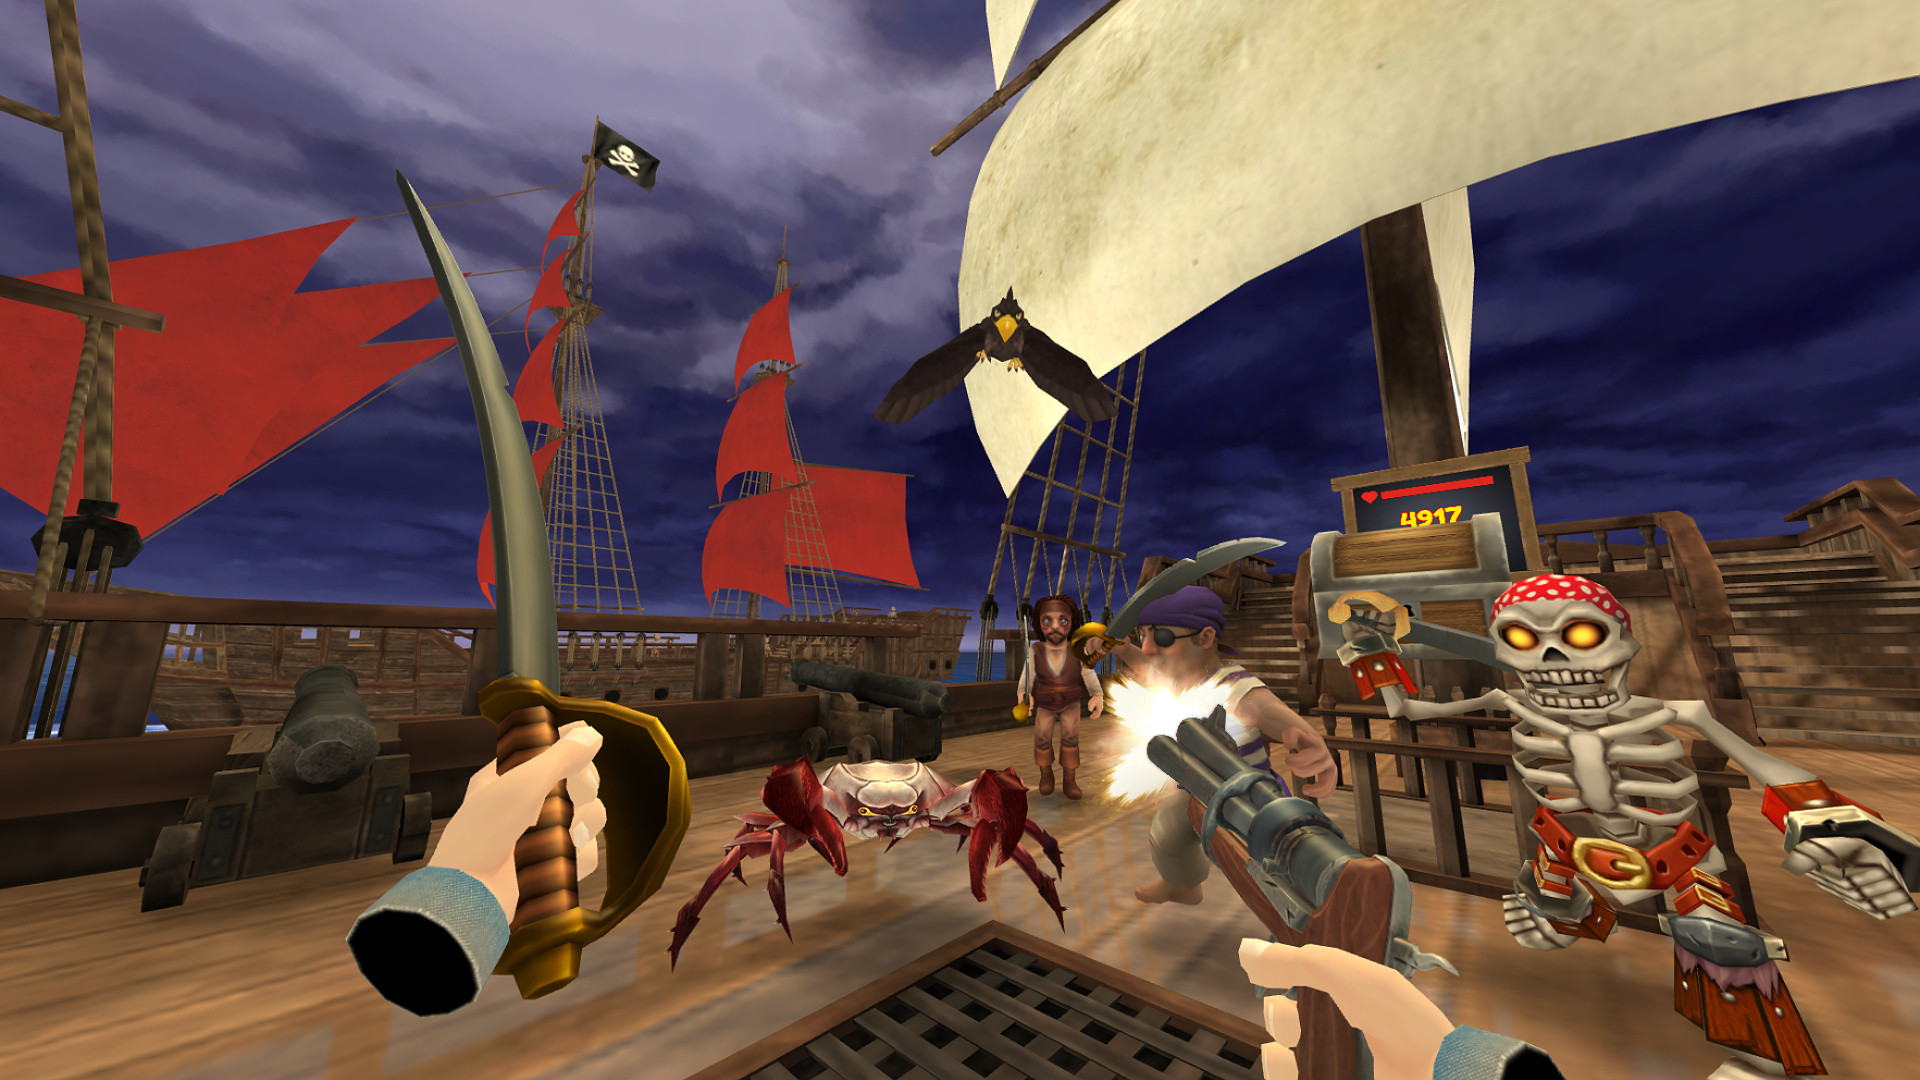 Pirates on Deck VR Free Download